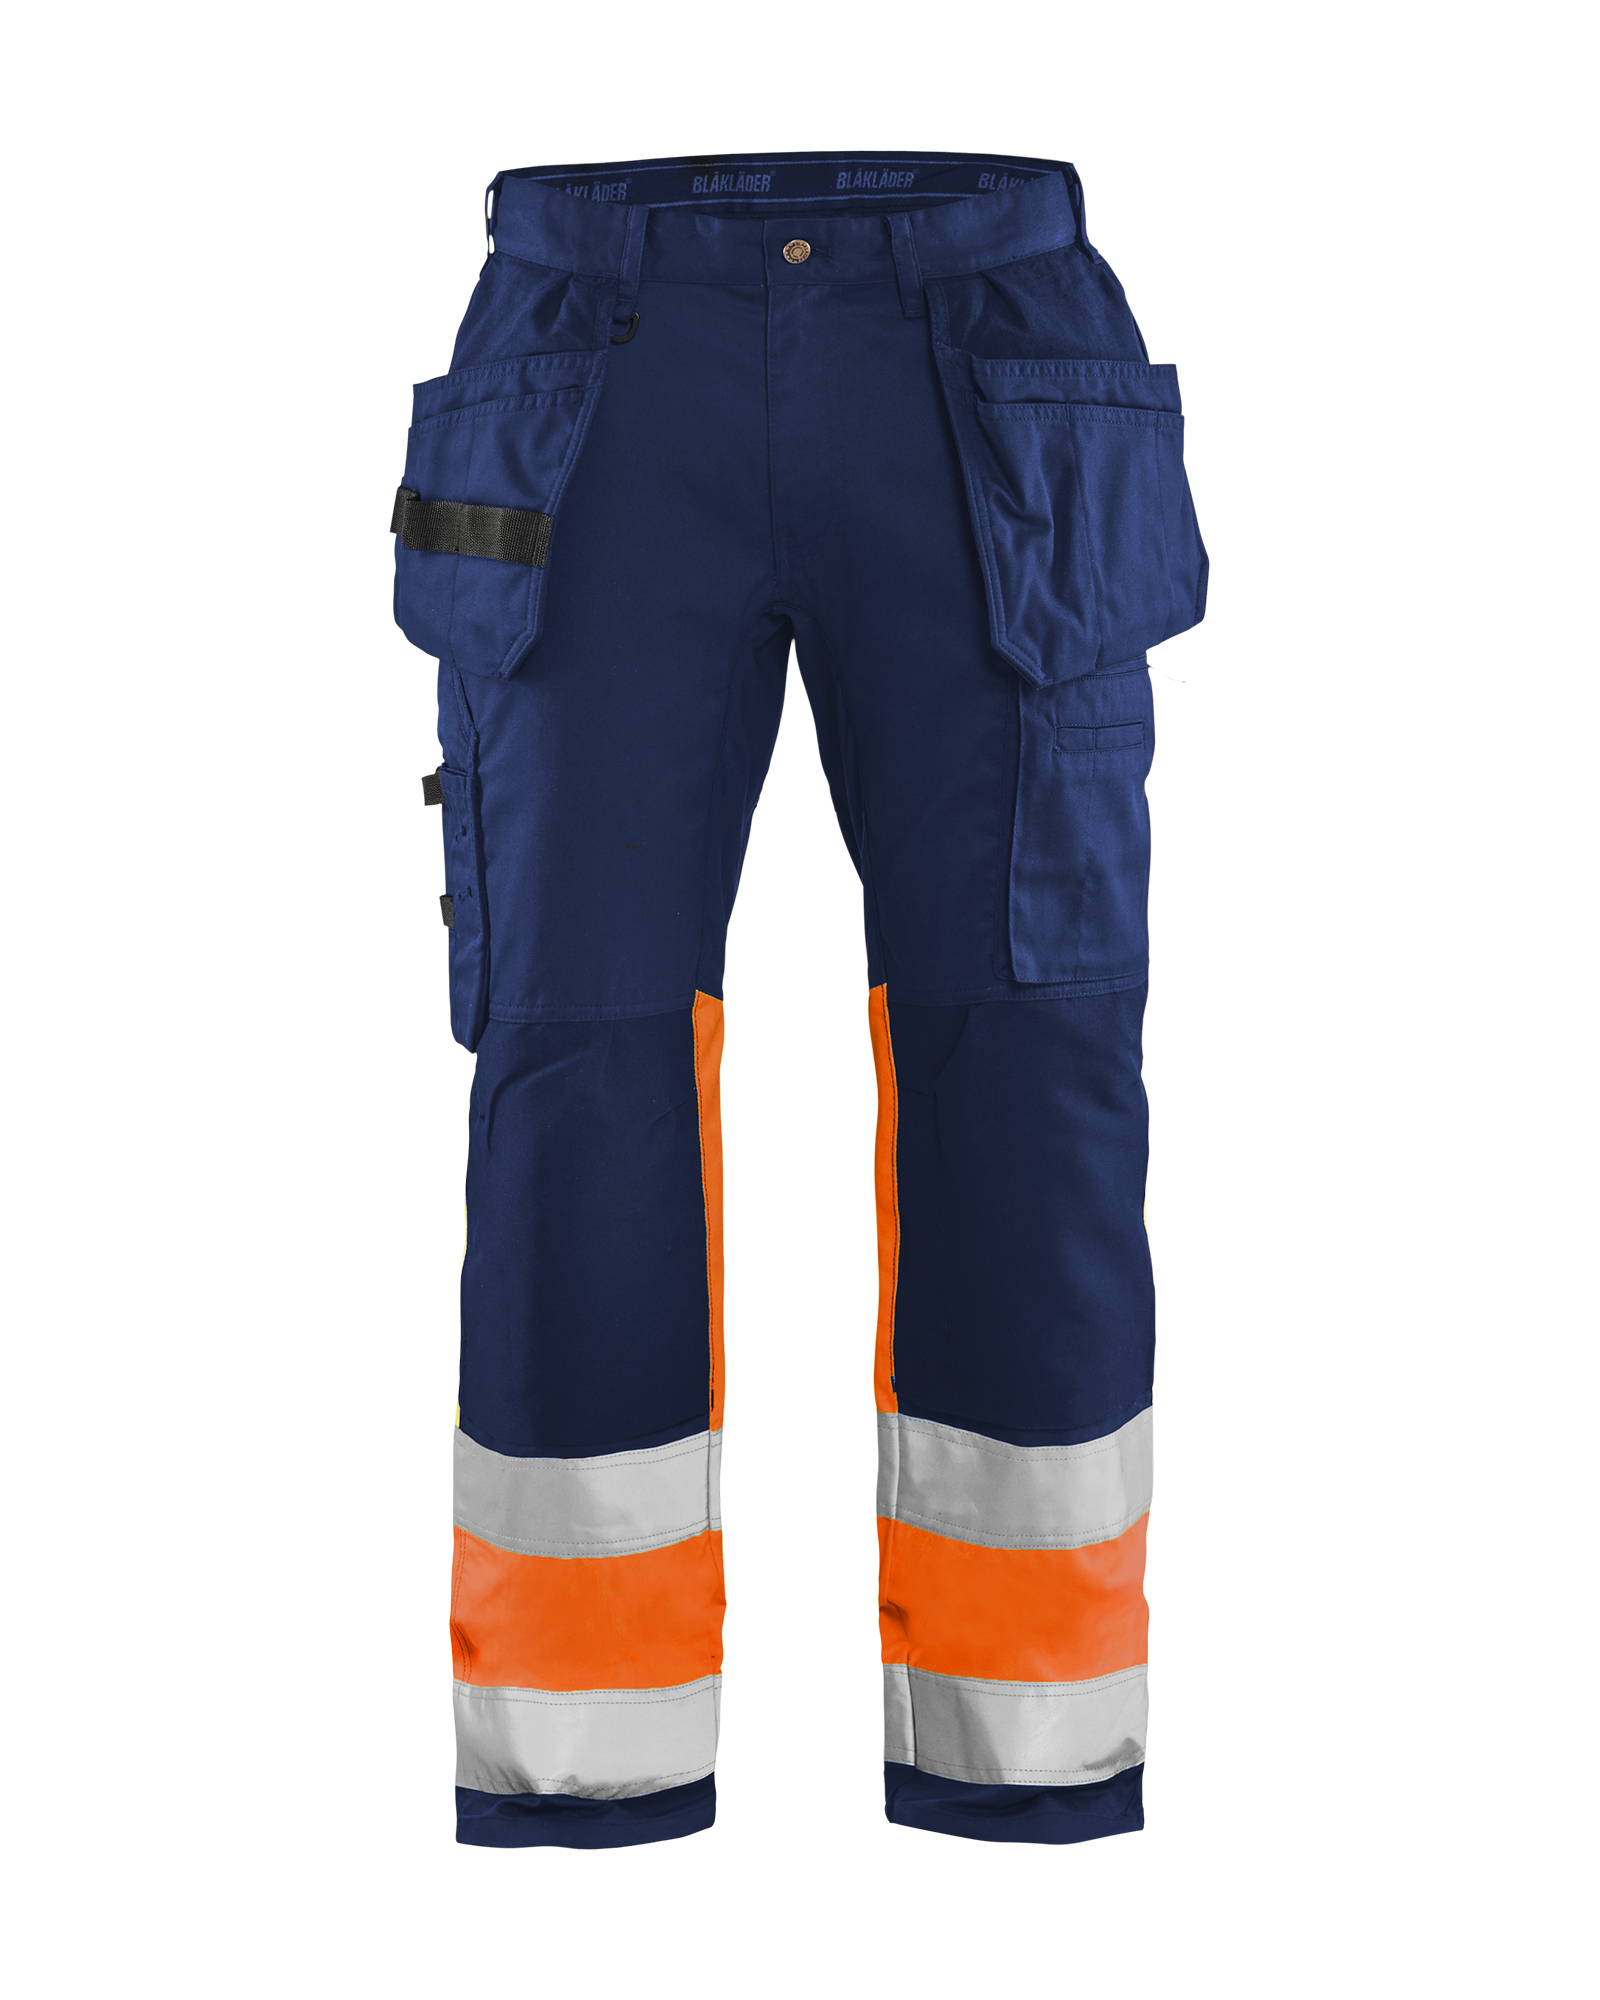 Pantalon artisan haute-visibilité +stretch Blåkläder 1558 Marine/Orange fluo Blaklader - 155818118953C